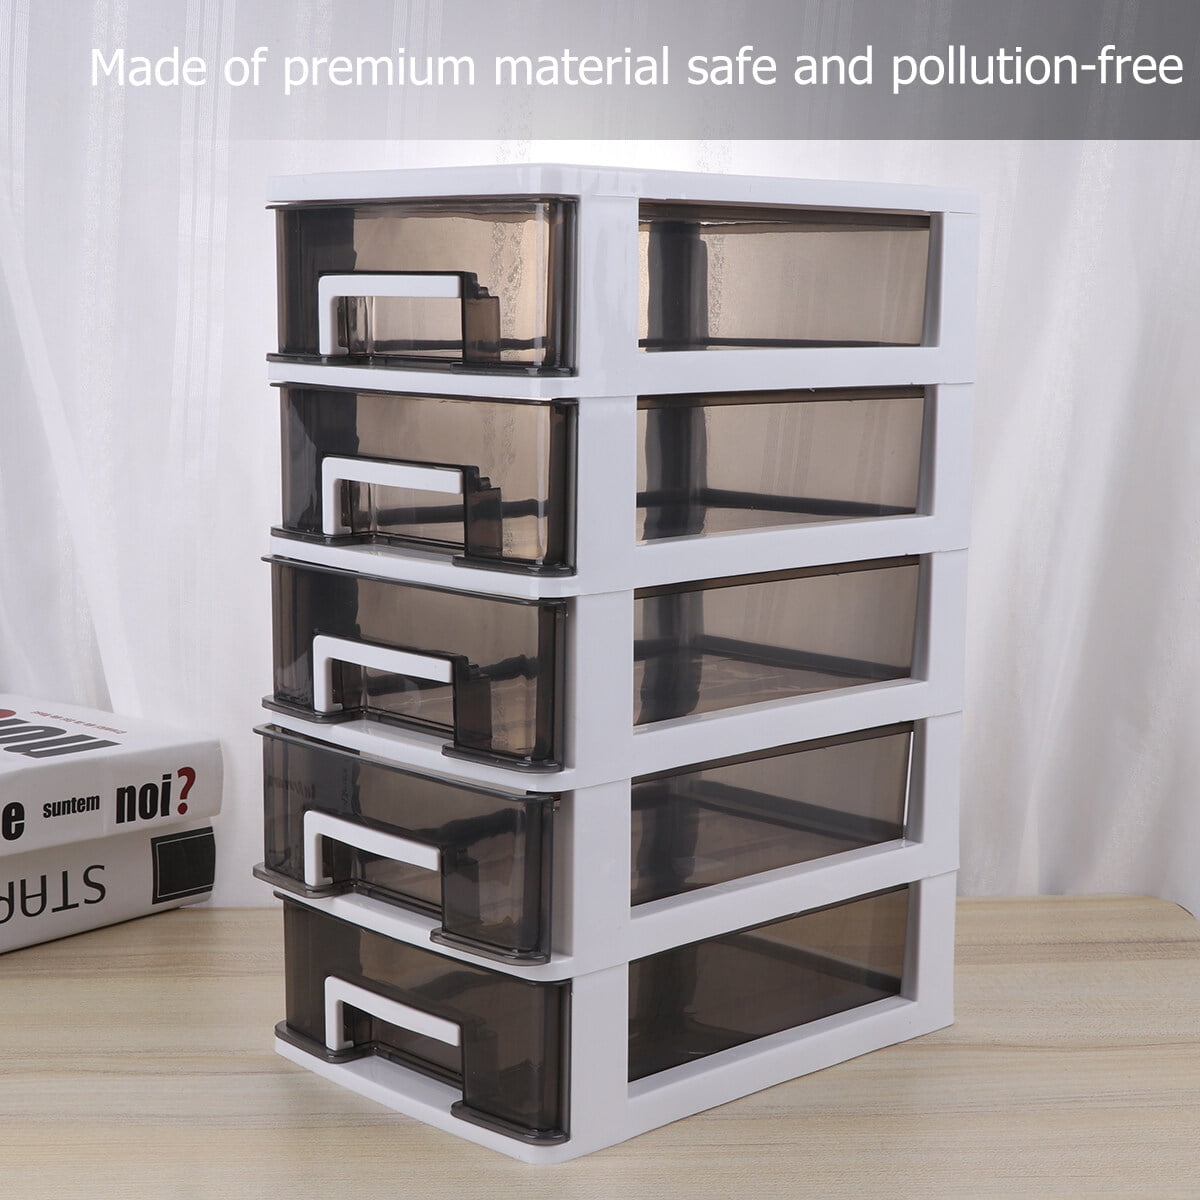 drawer cosmetics organizer clear storage drawers 3/4 Layers Transparent  Desktop